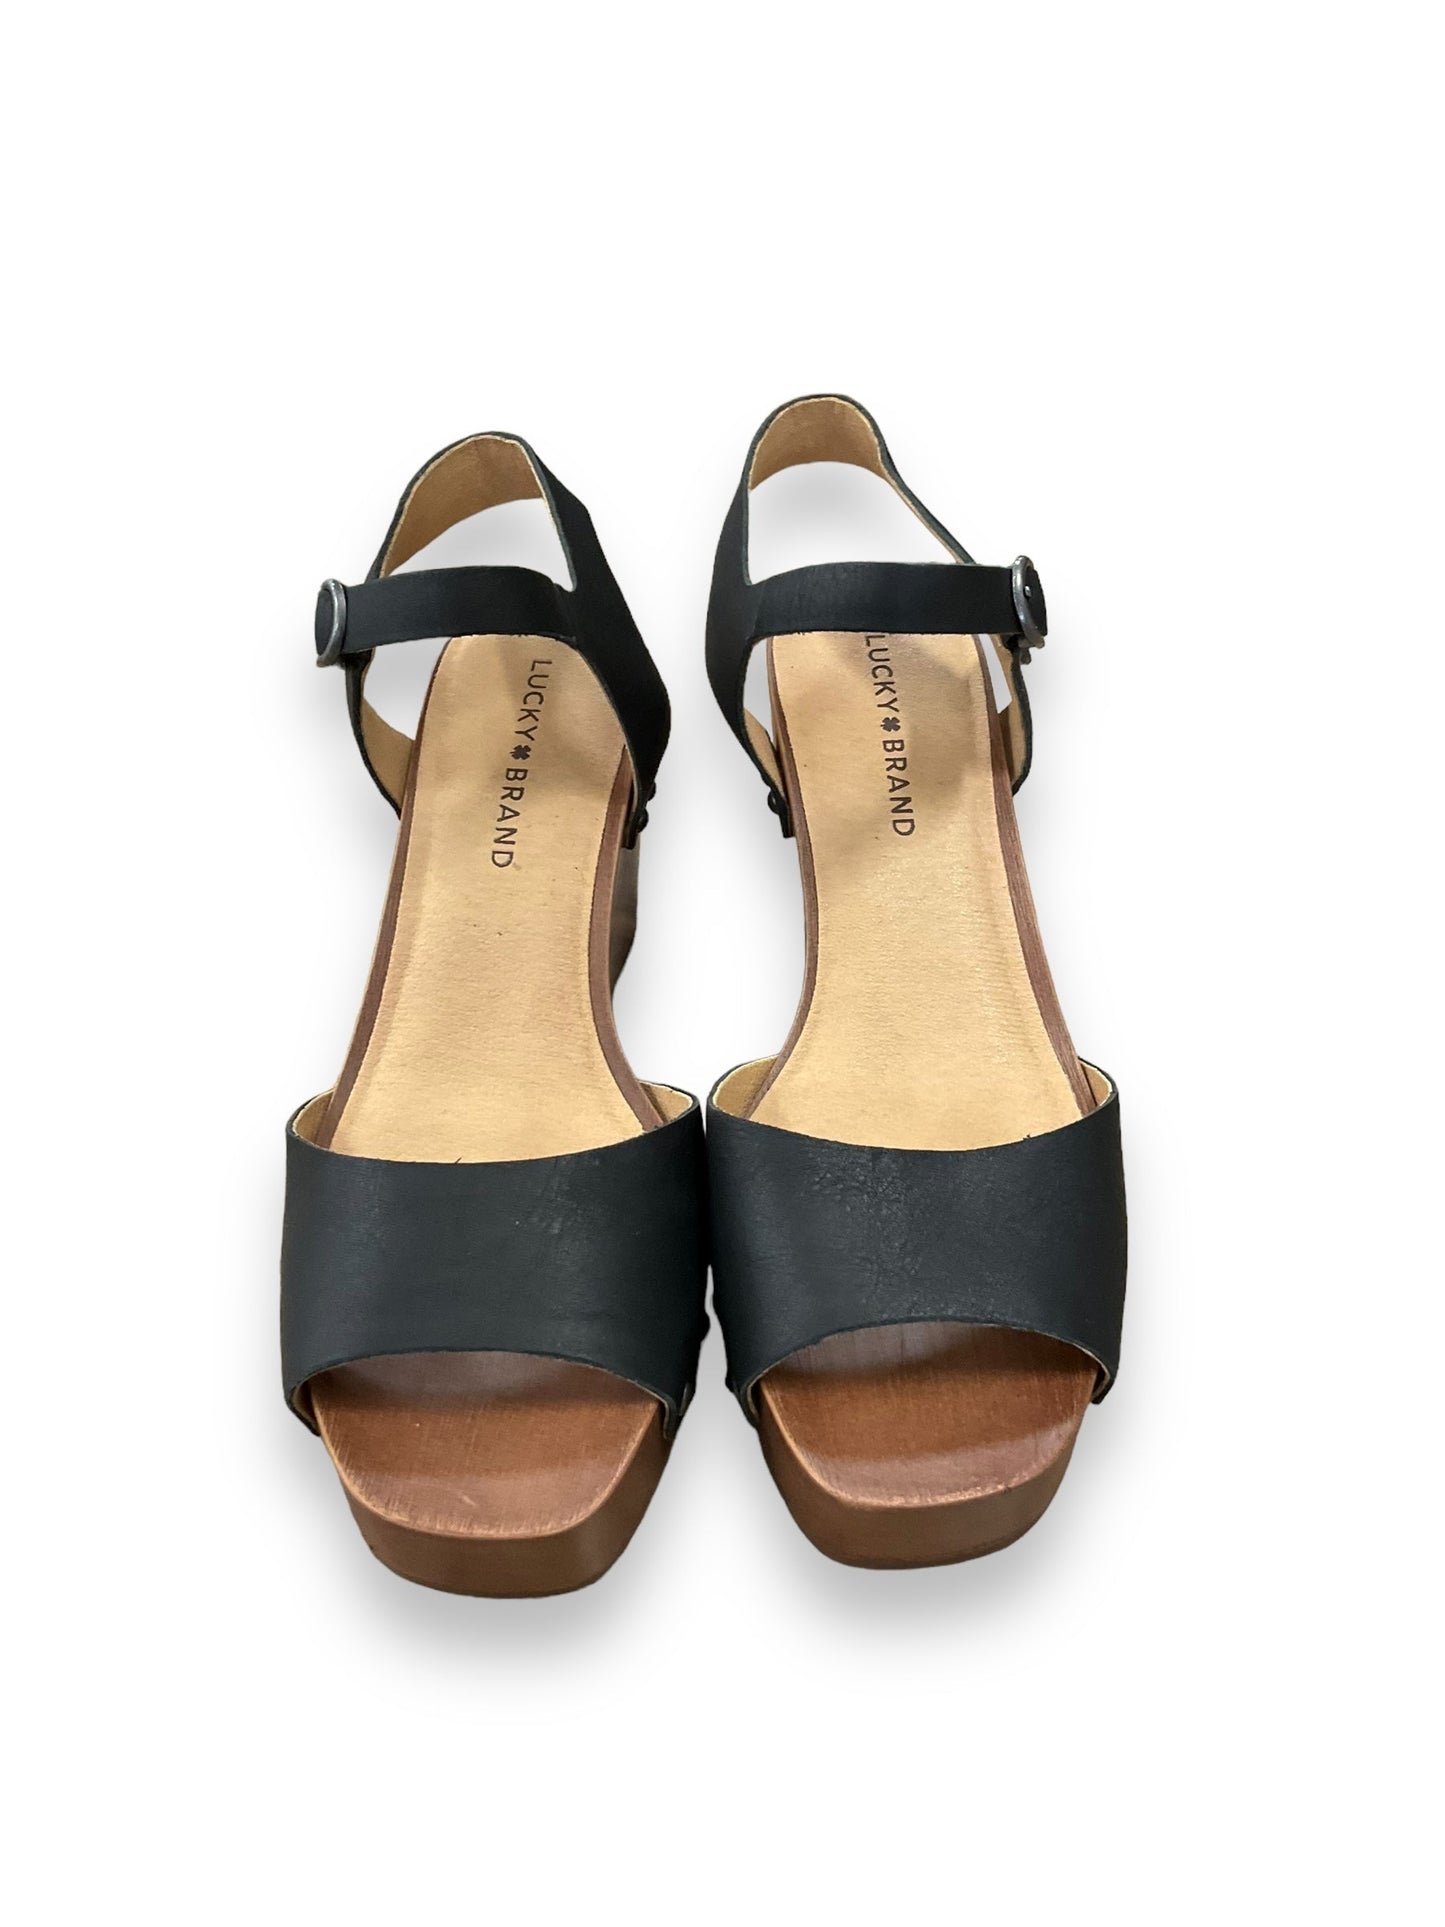 Black Sandals Heels Wedge Lucky Brand, Size 7.5